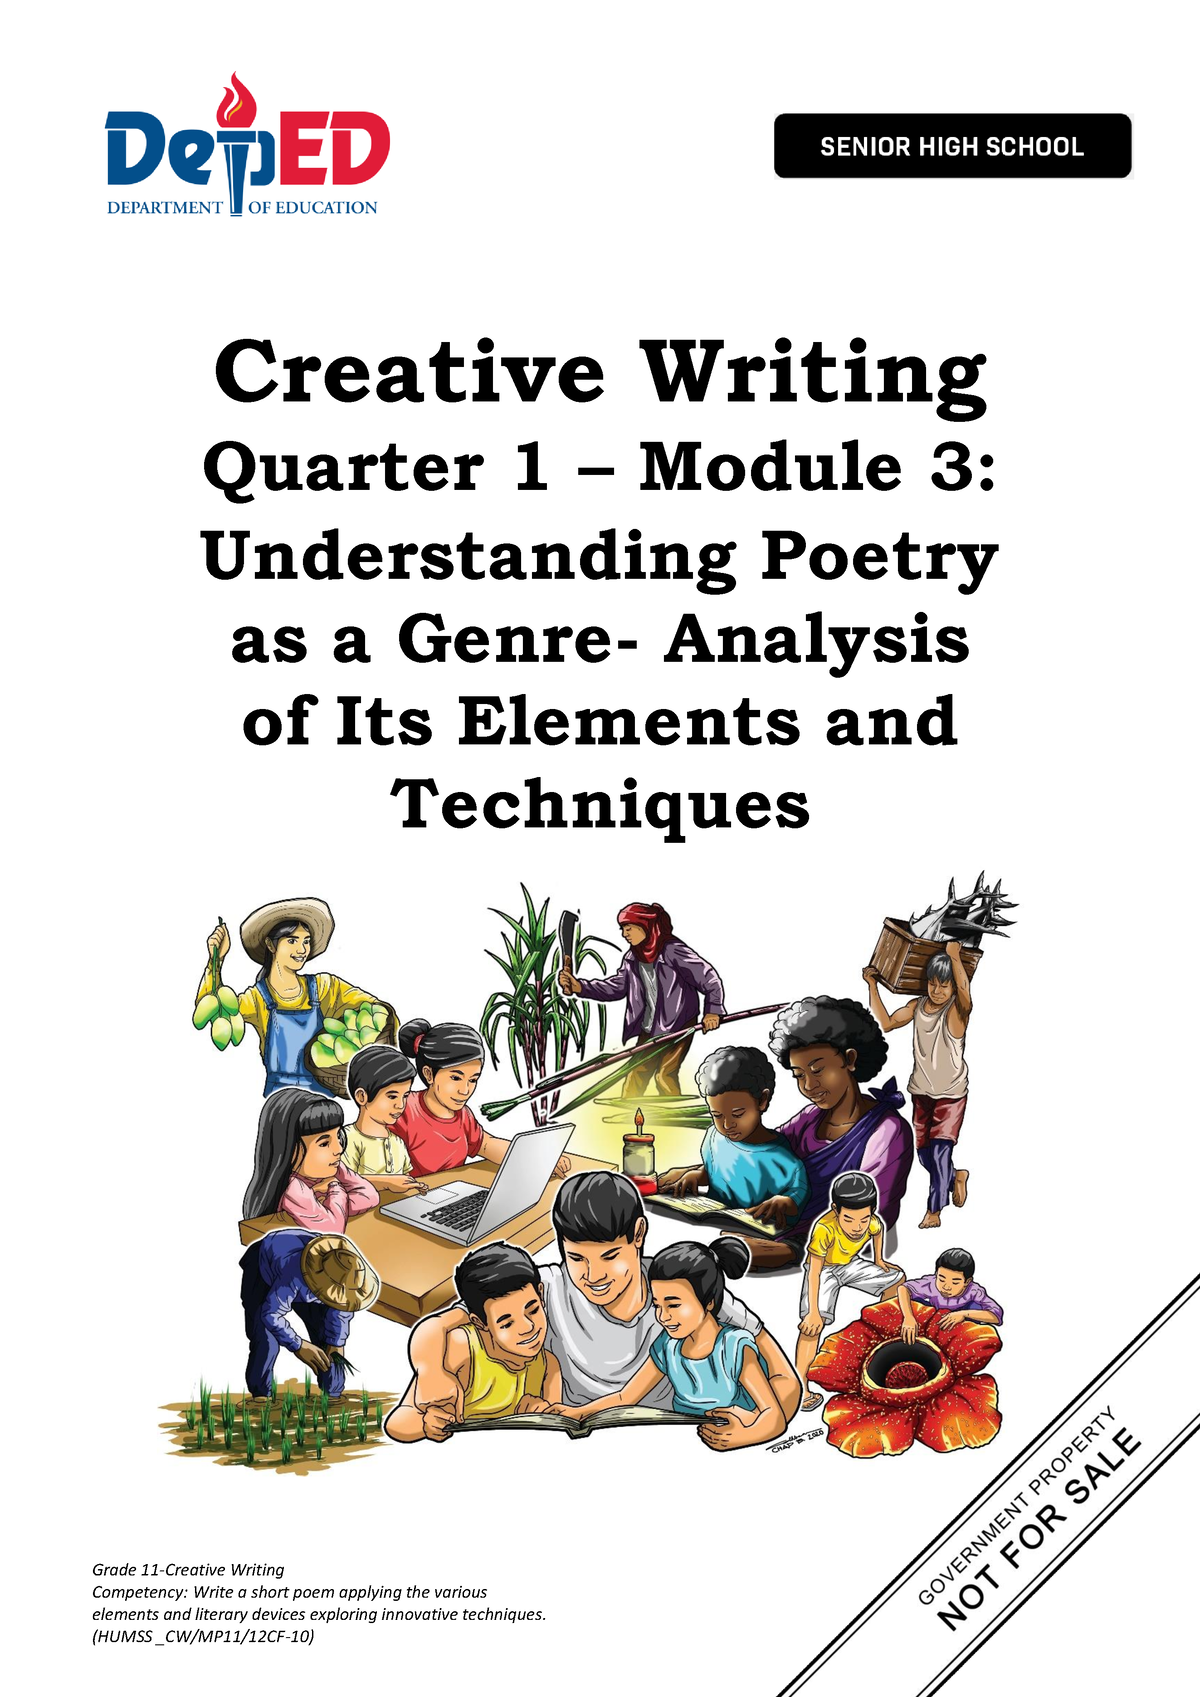 grade 11 creative writing module 6 answer key